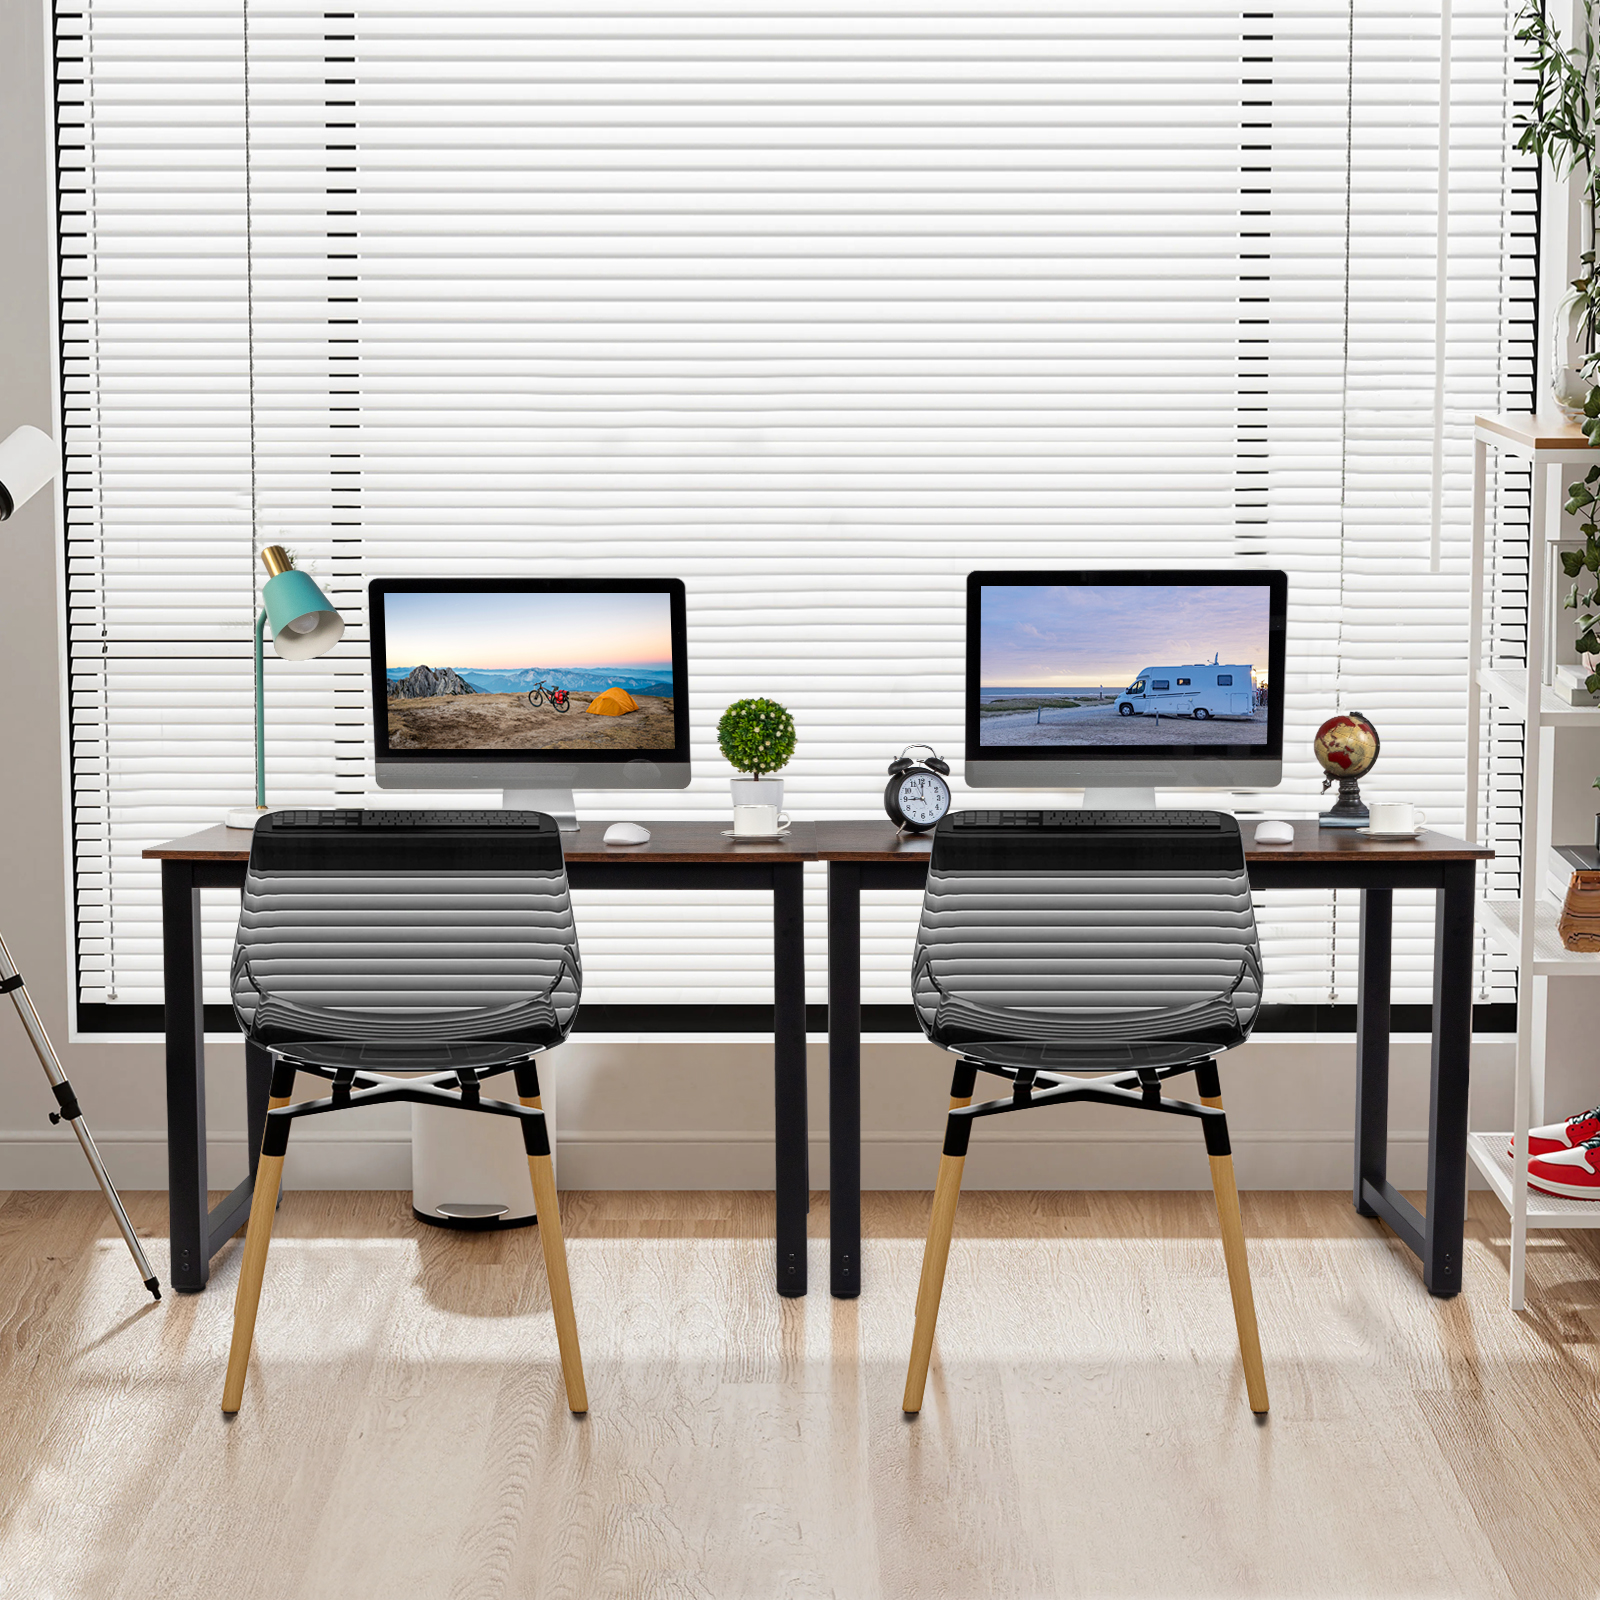 Ktaxon Wood Computer Desk PC Laptop Study Table Workstation Home Office Furniture - image 3 of 13